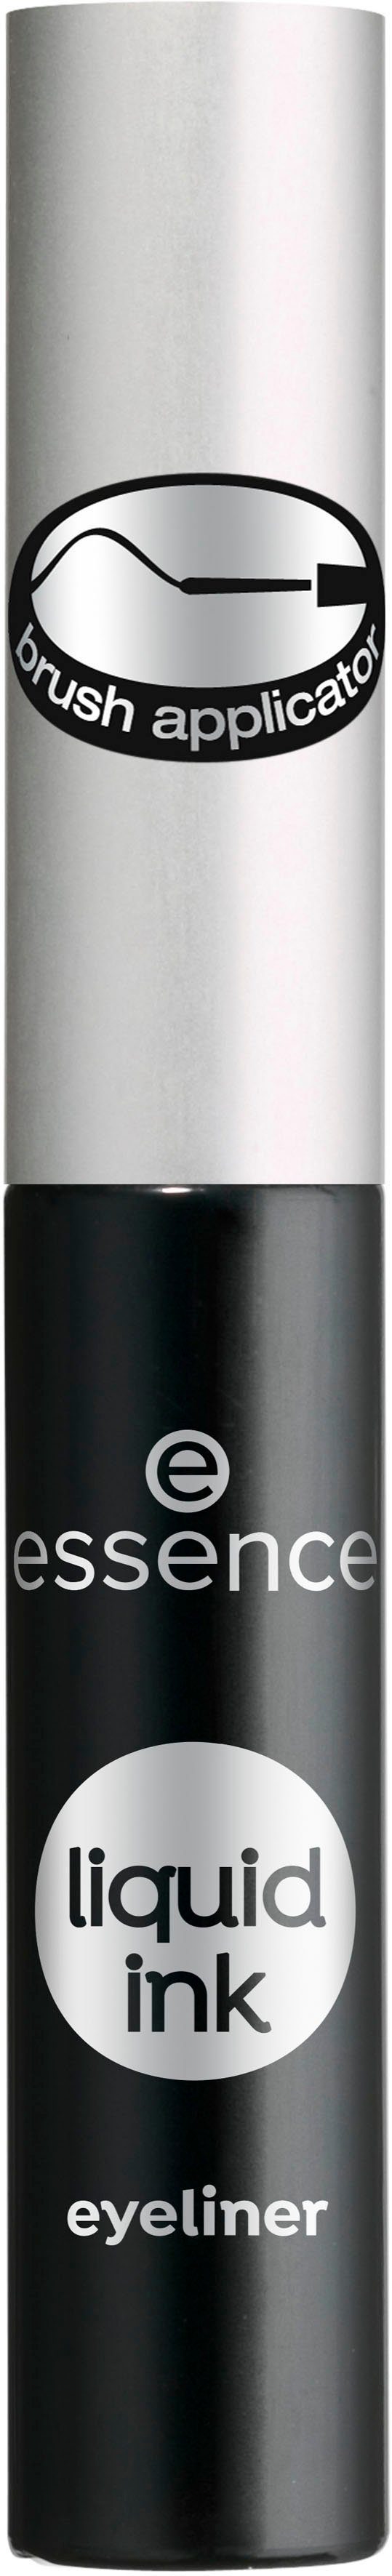 Essence Eyeliner liquid ink eyeliner, 3-tlg., Mit speziell feinem  Pinsel-Applikator